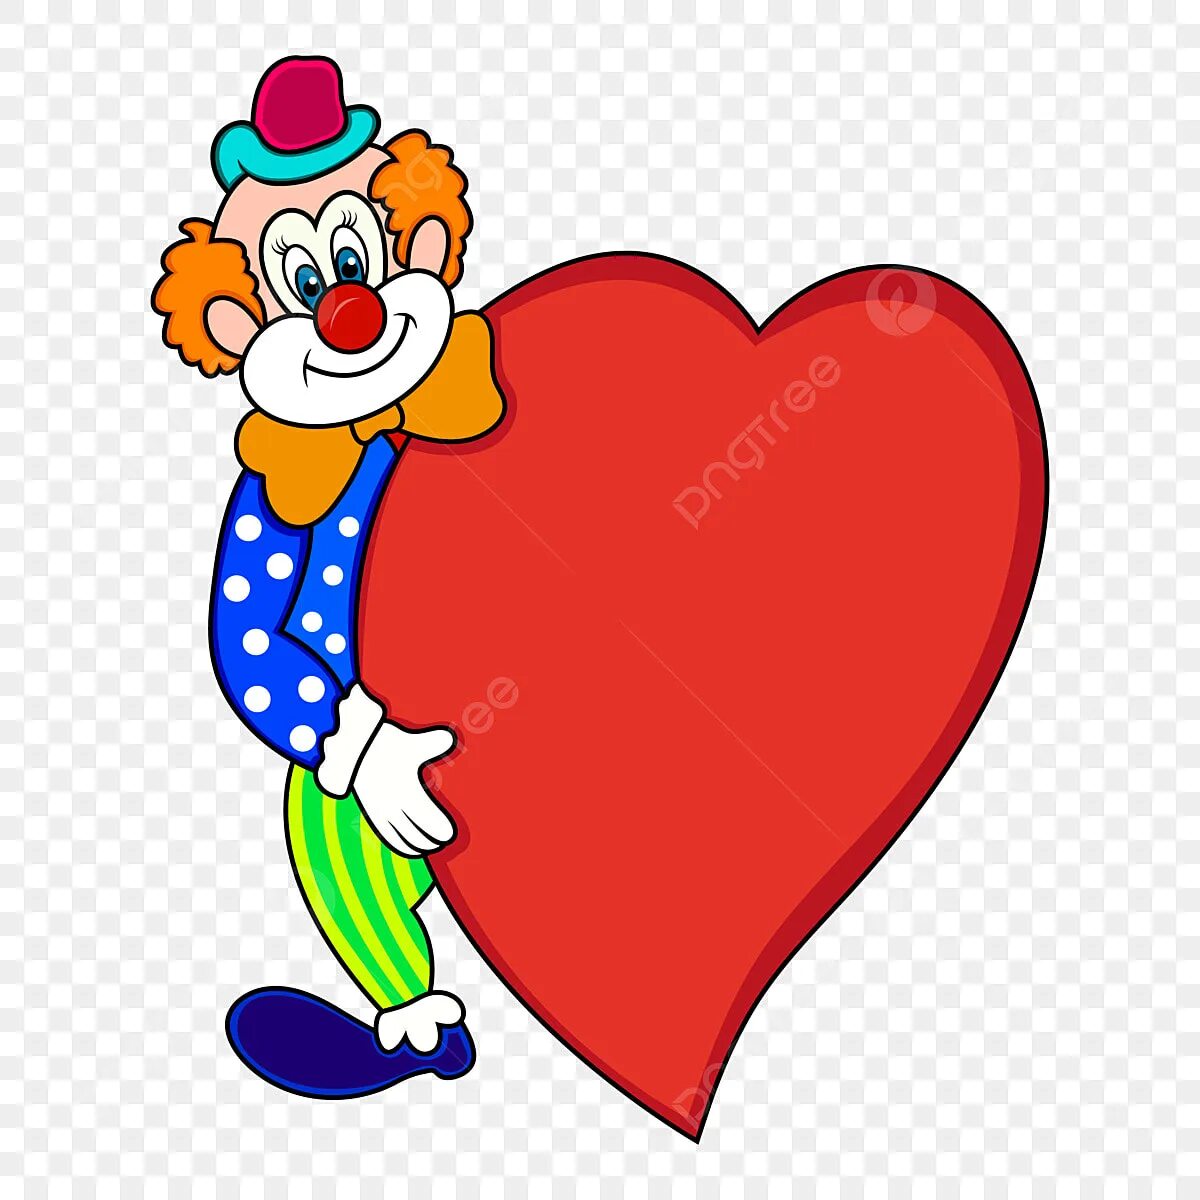 Сердце клоун. Клоун с сердцем. Клоун с сердцем рисунок. Клоун с сердечком. Женские клоуны с сердечками.